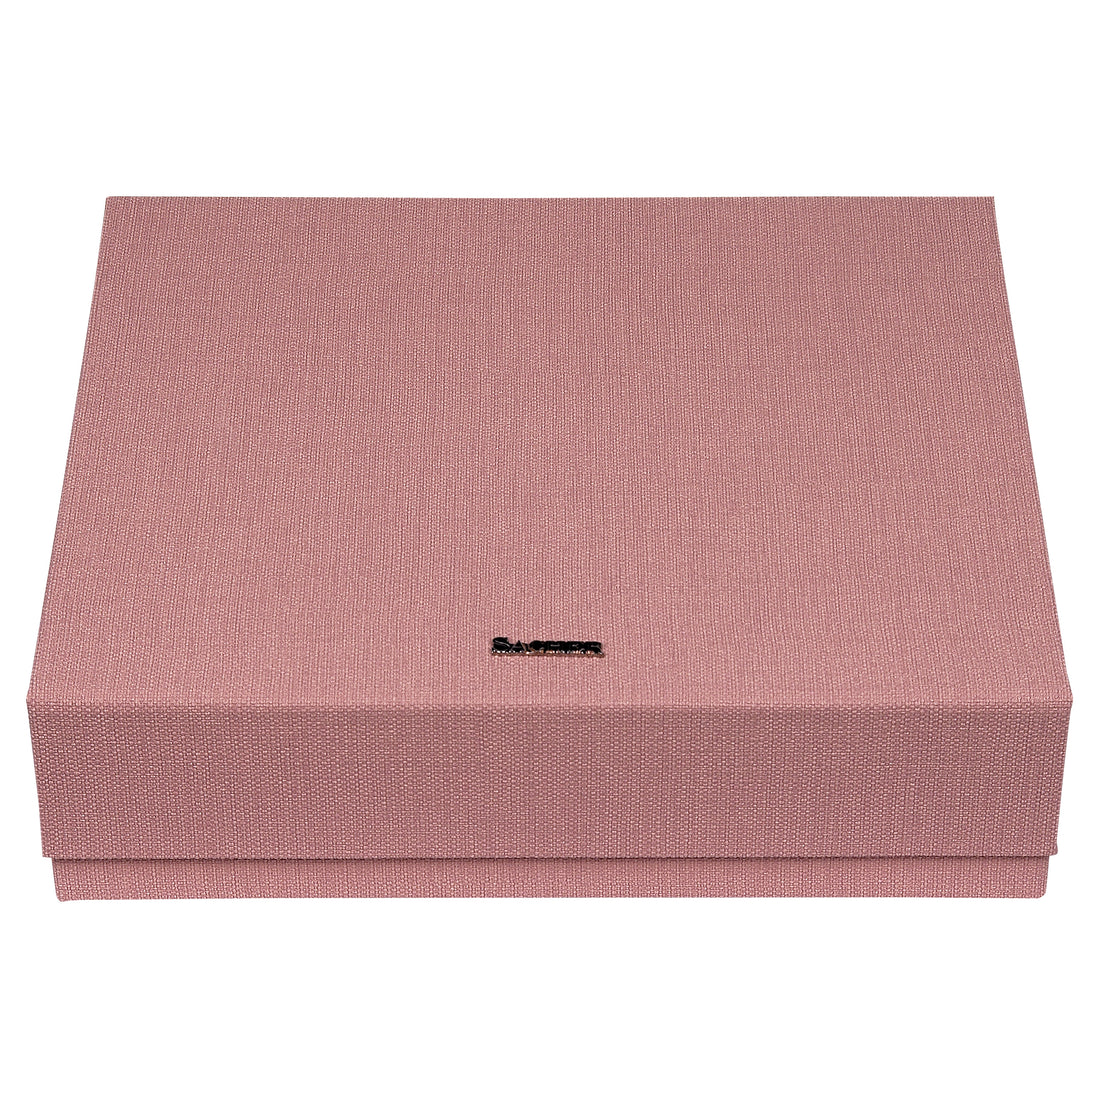 Schmuckbox Nora pastello | rosa 1846 Manufaktur SACHER Store / Offizieller –